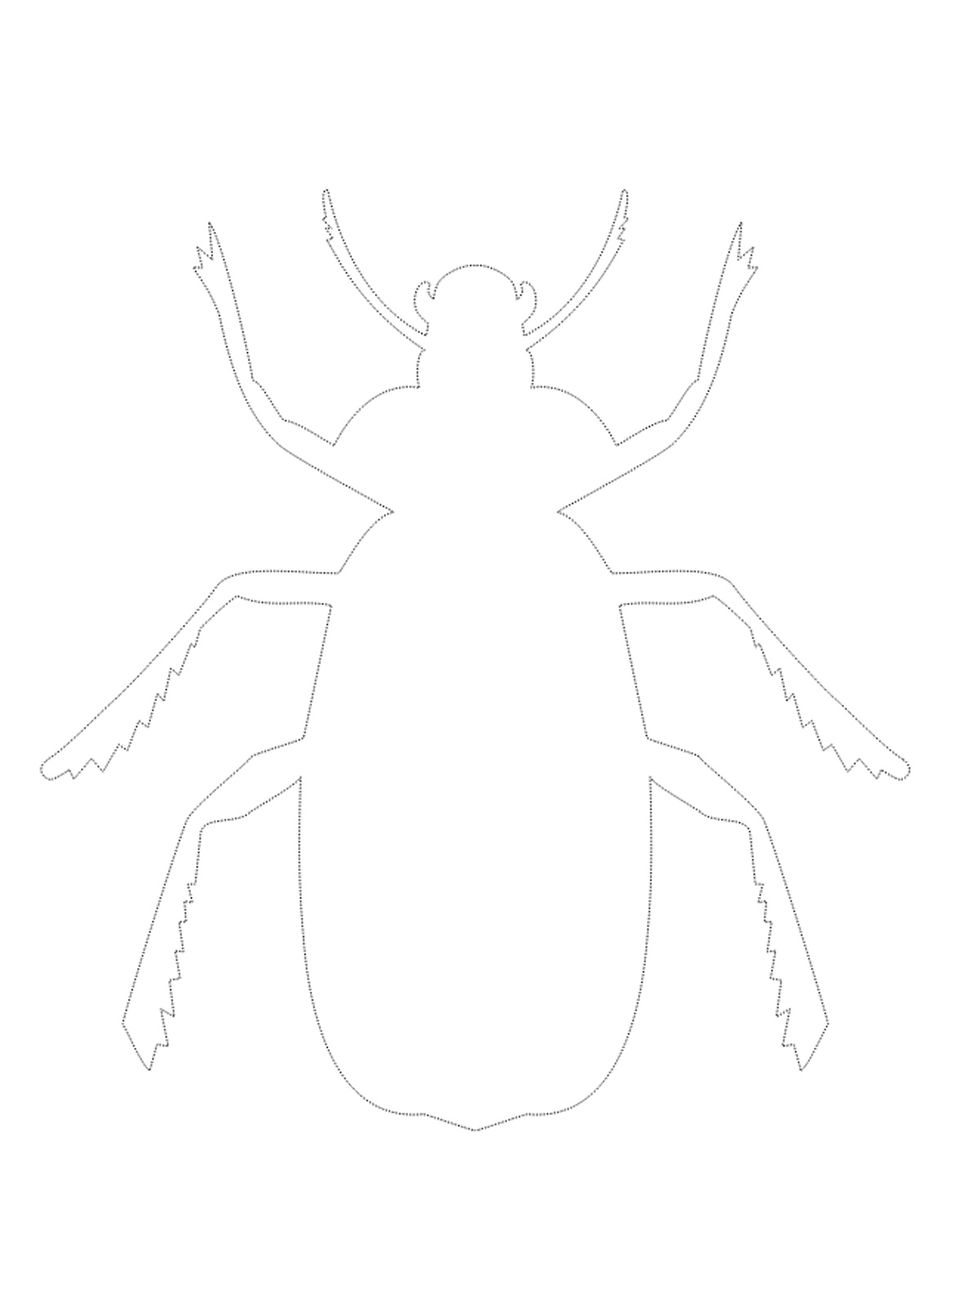 White, Insect, Spider, Pest, Invertebrate, Line, Organism, Arachnid, Line art, Illustration, 